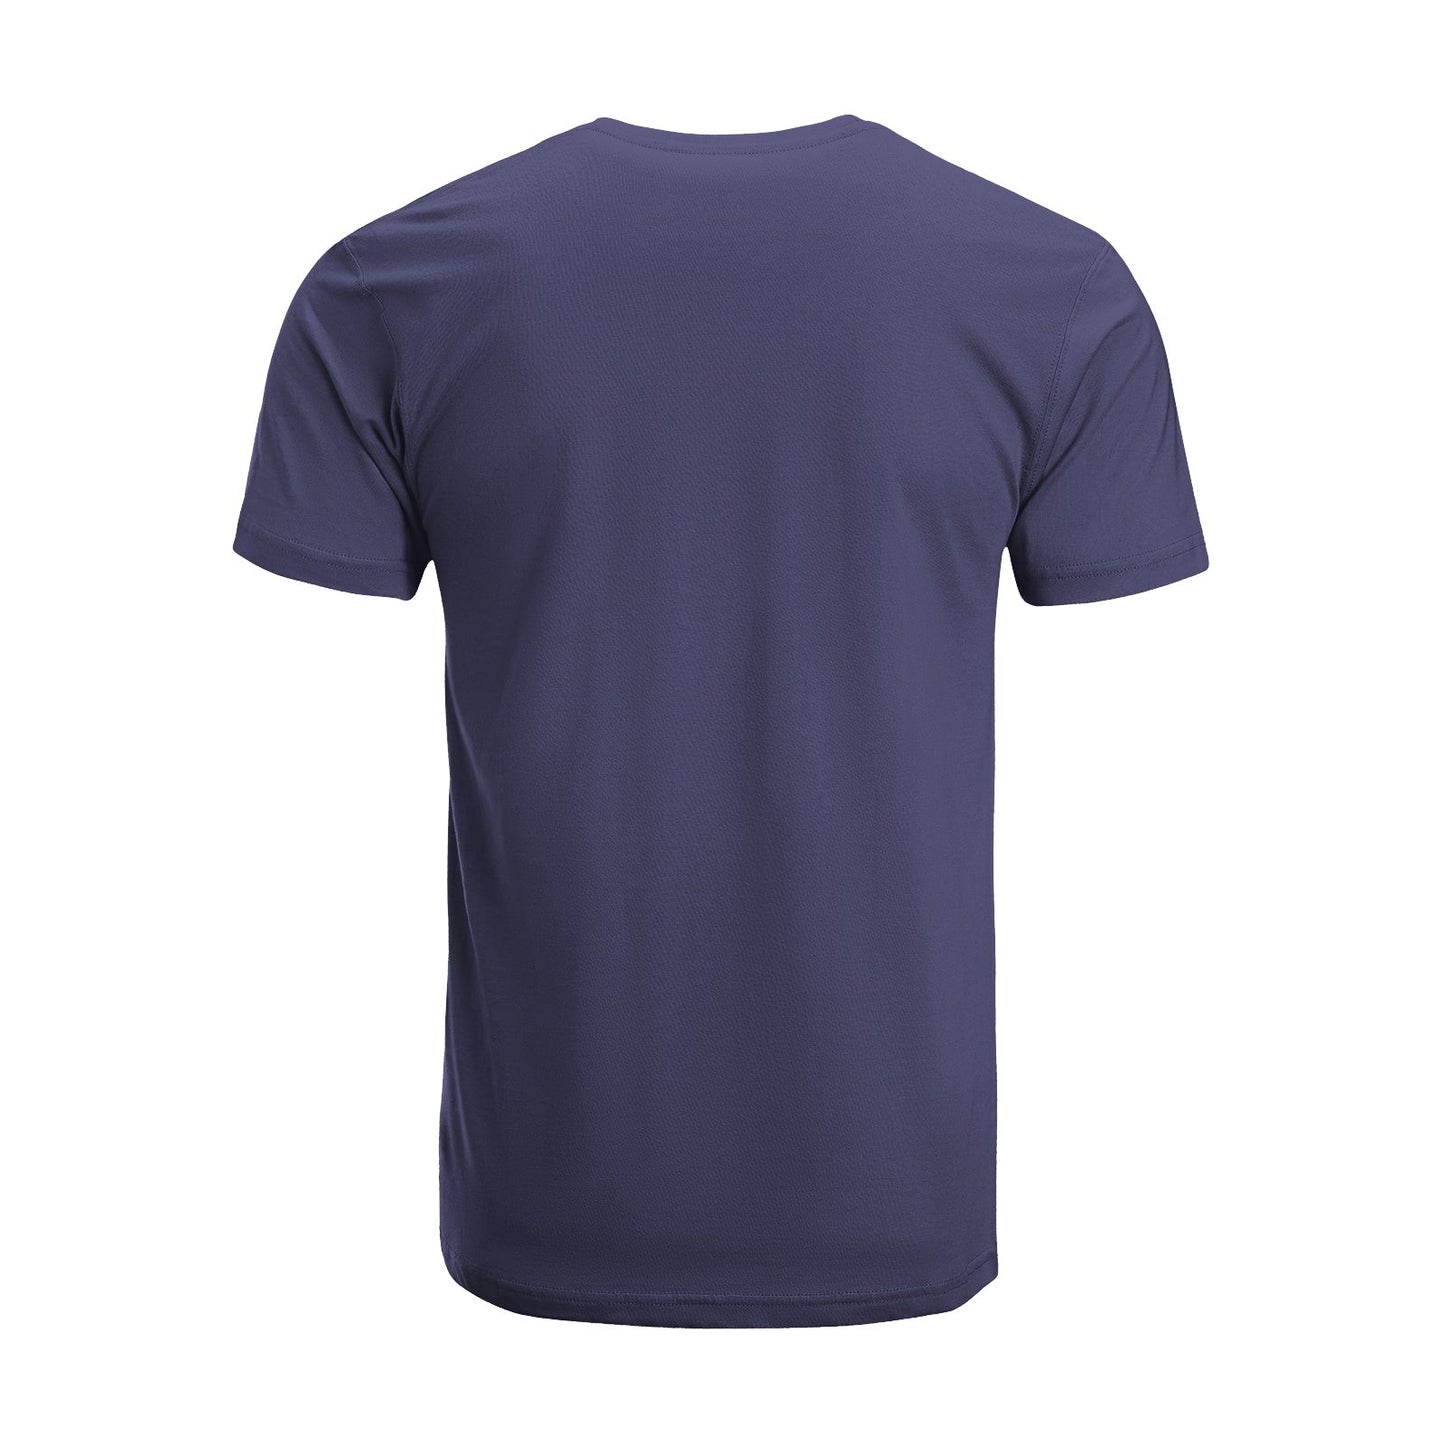 Unisex Short Sleeve Crew Neck Cotton Jersey T-Shirt Gym No. 30 - Tara-Outfits.com